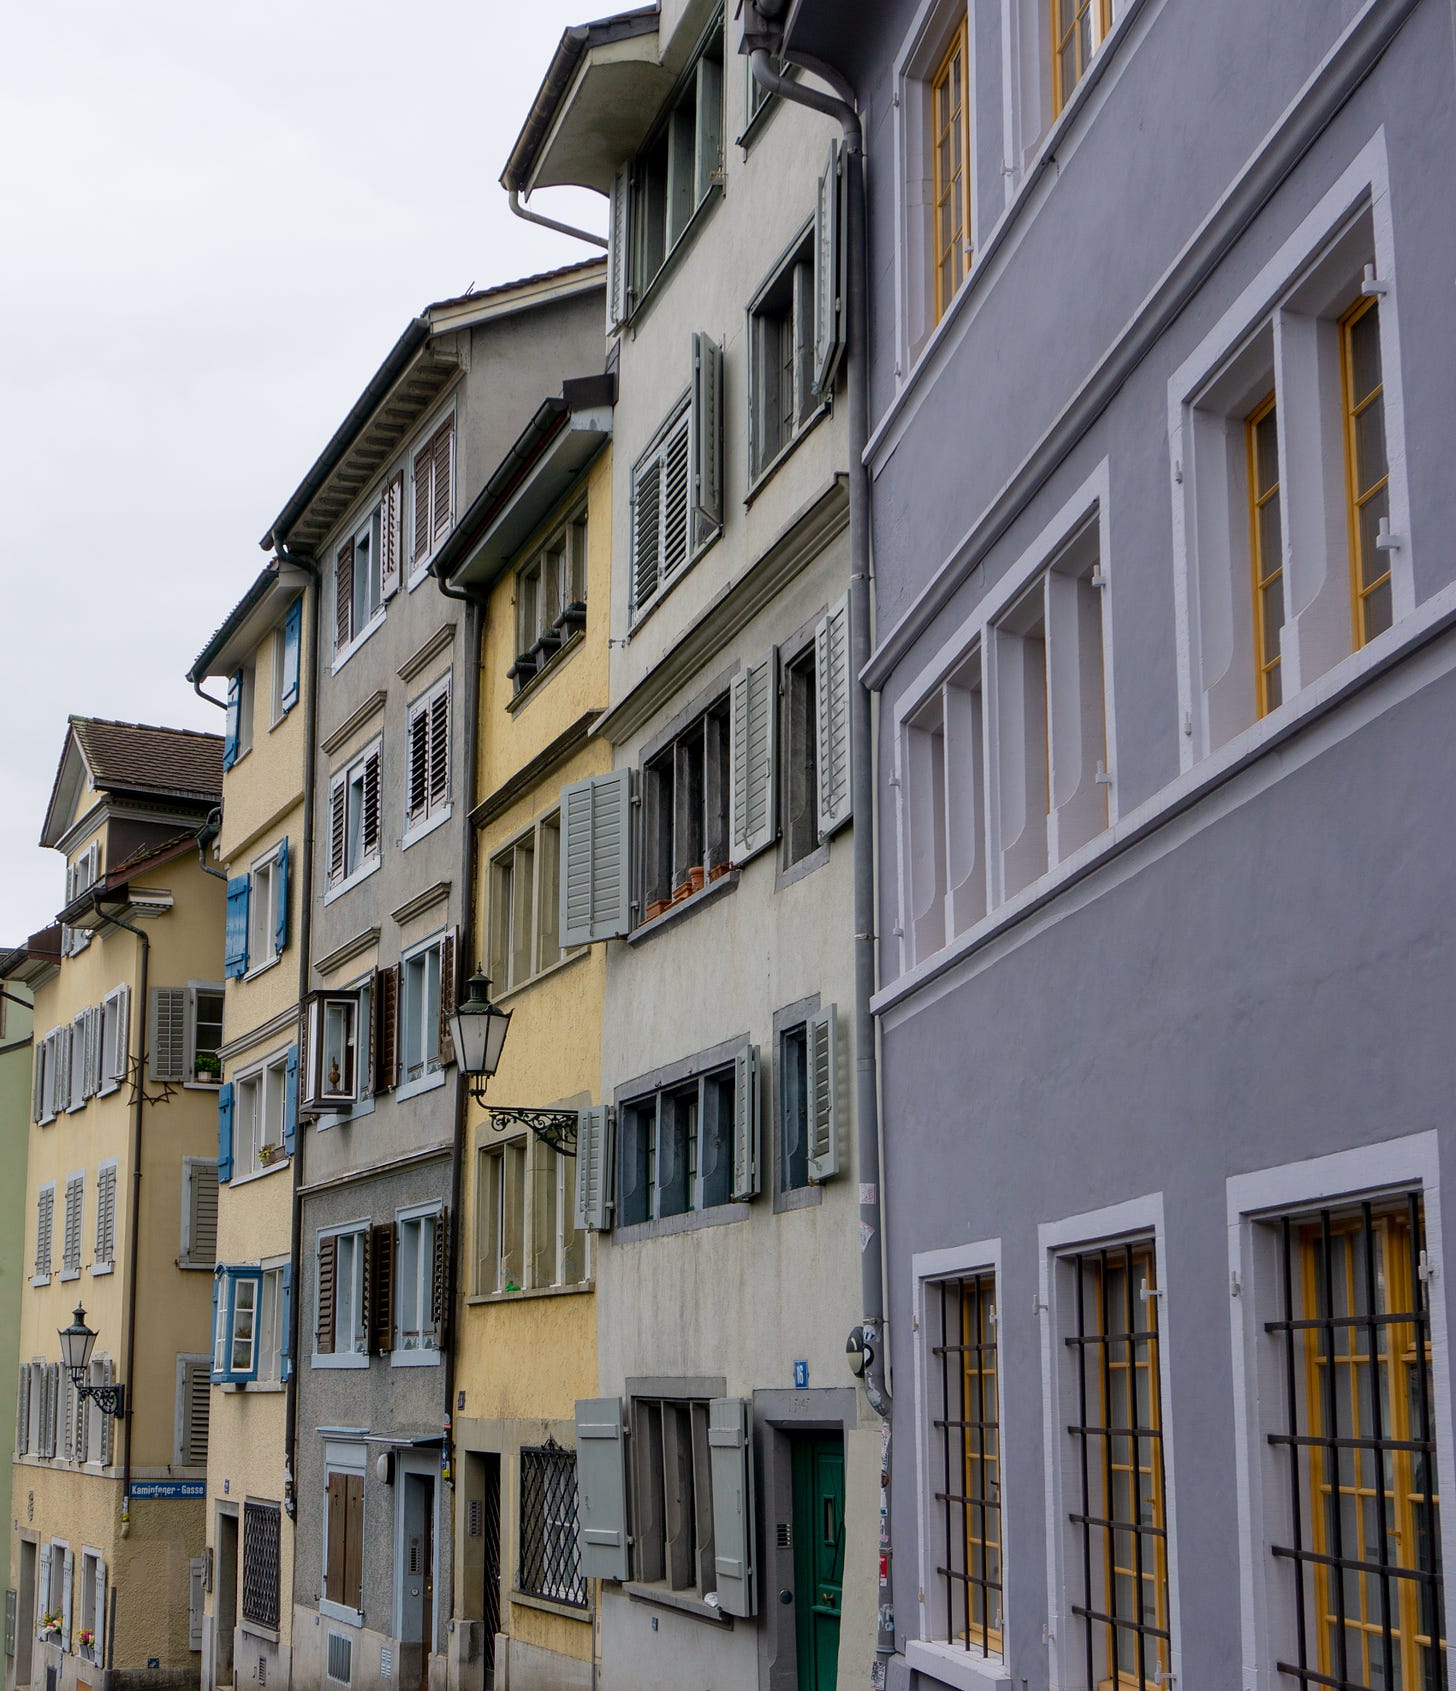 Row of buildings in Zurich